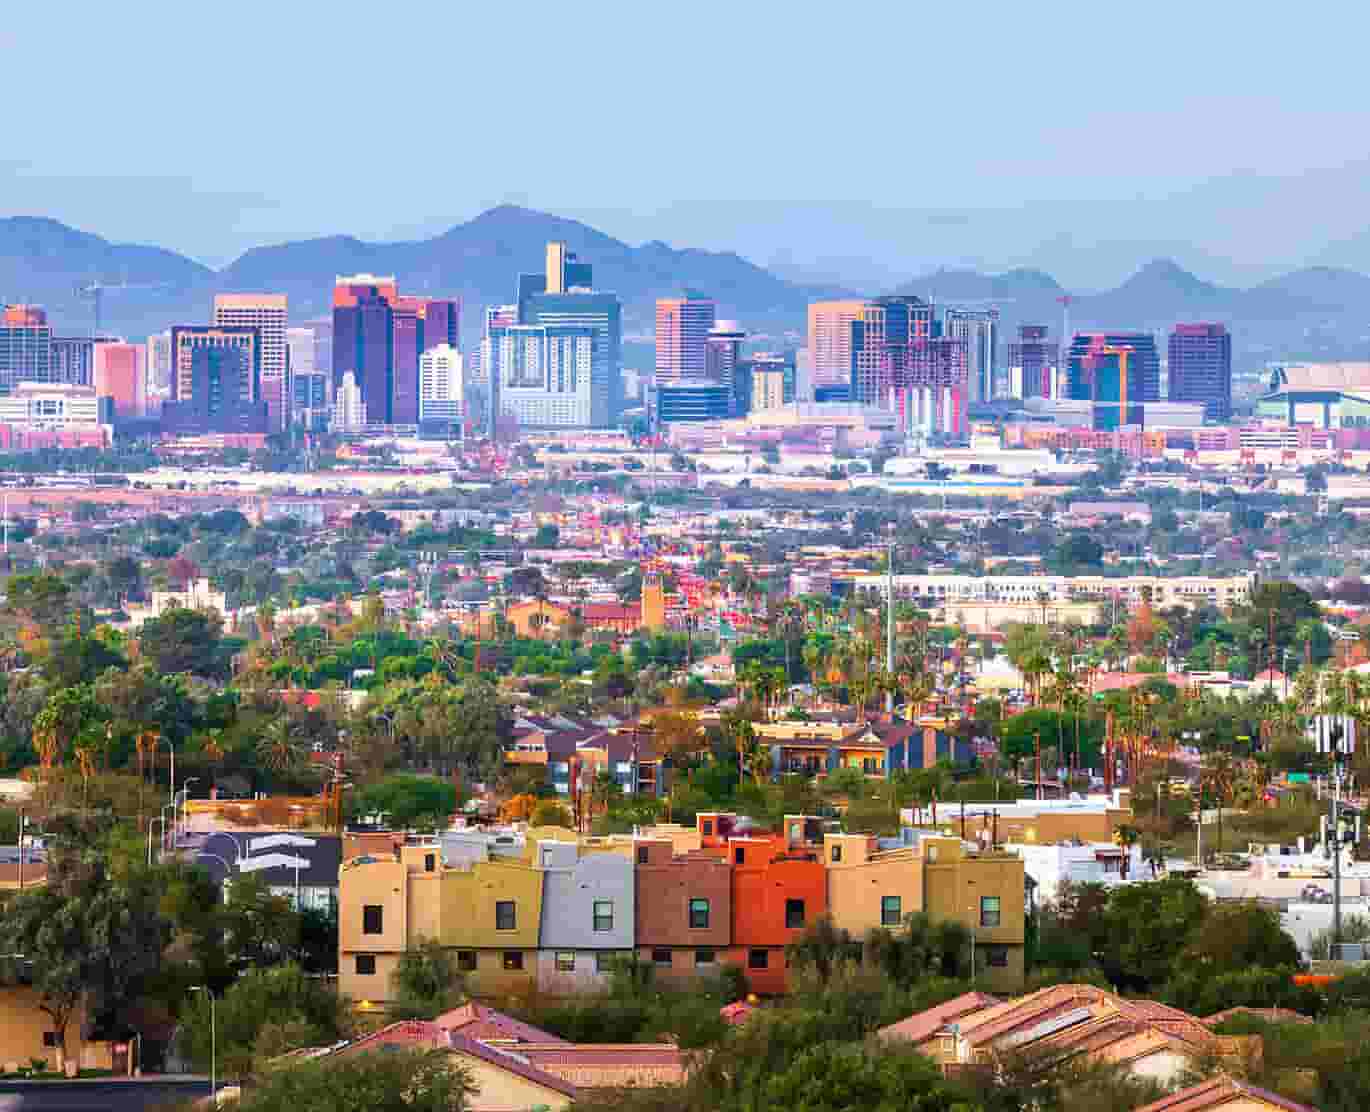 Phoenix, Arizona Skyline